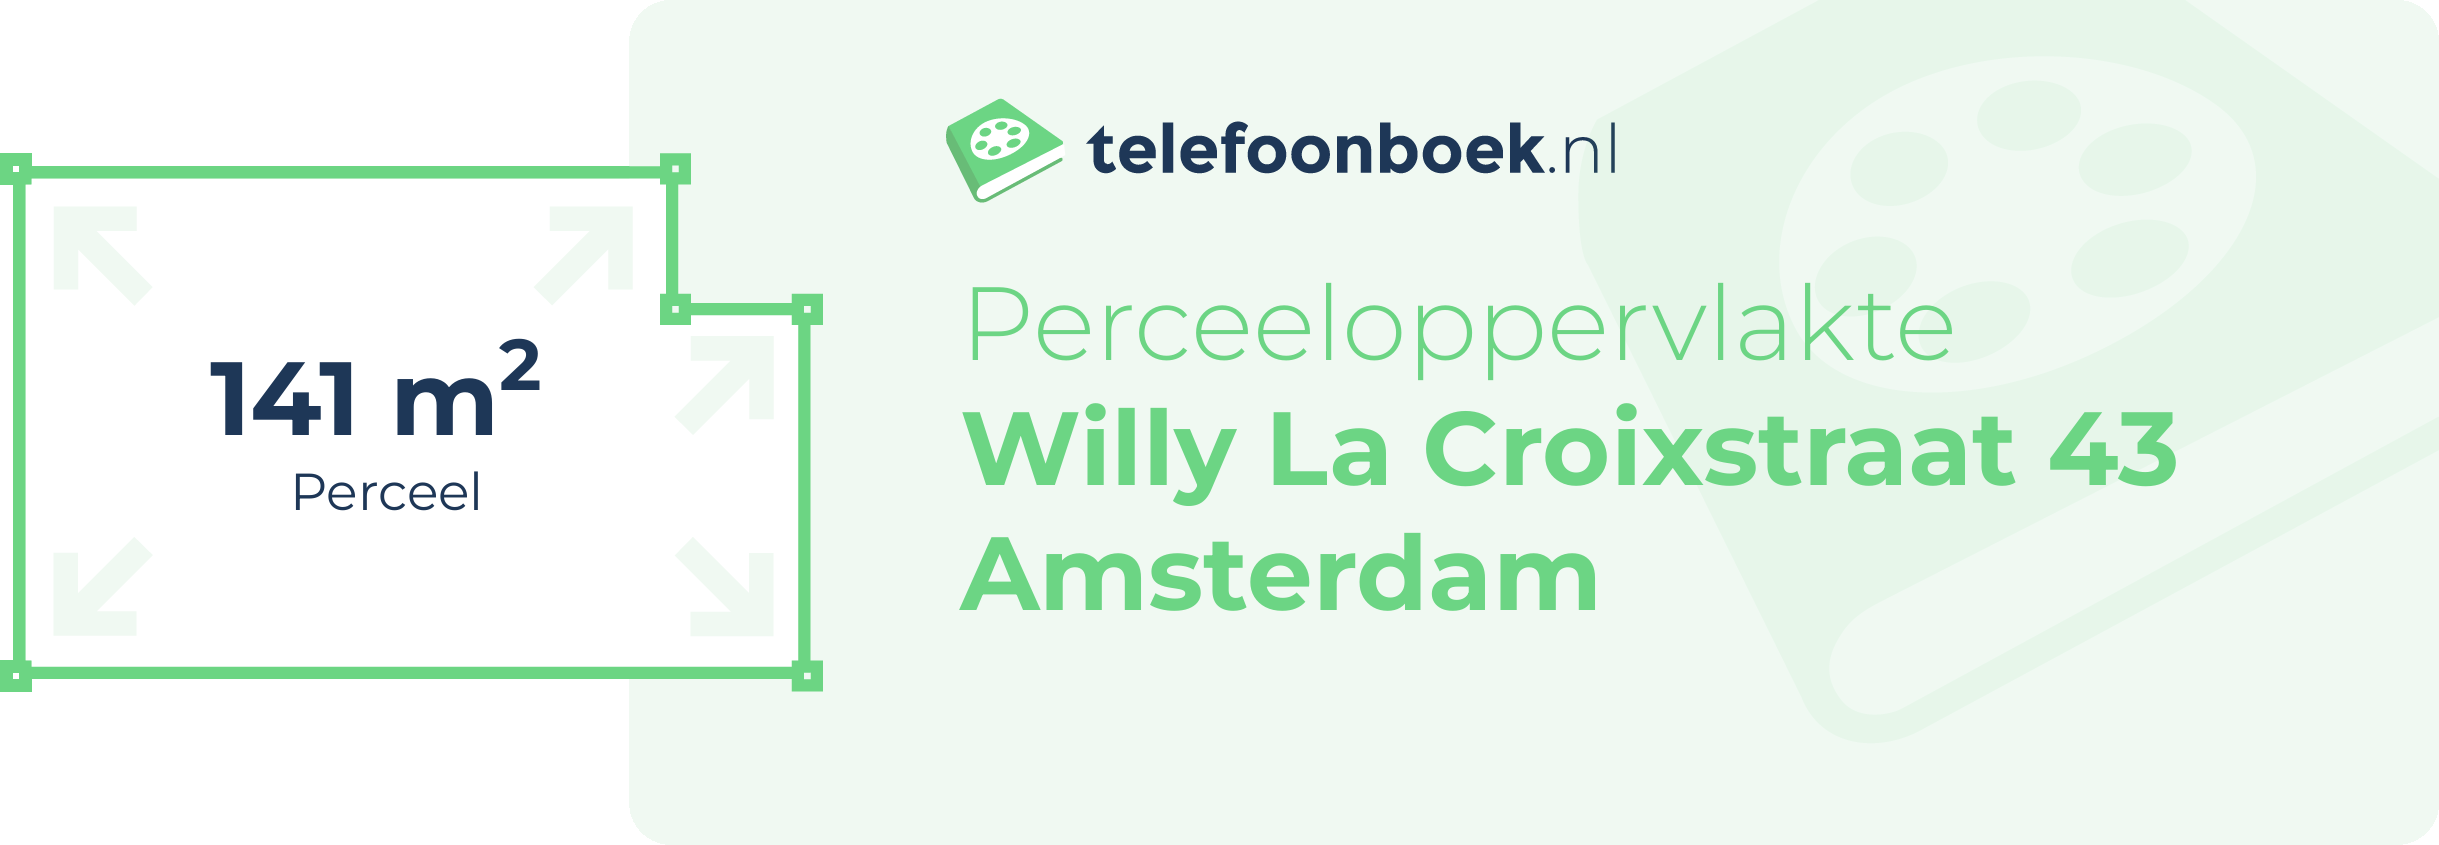 Perceeloppervlakte Willy La Croixstraat 43 Amsterdam